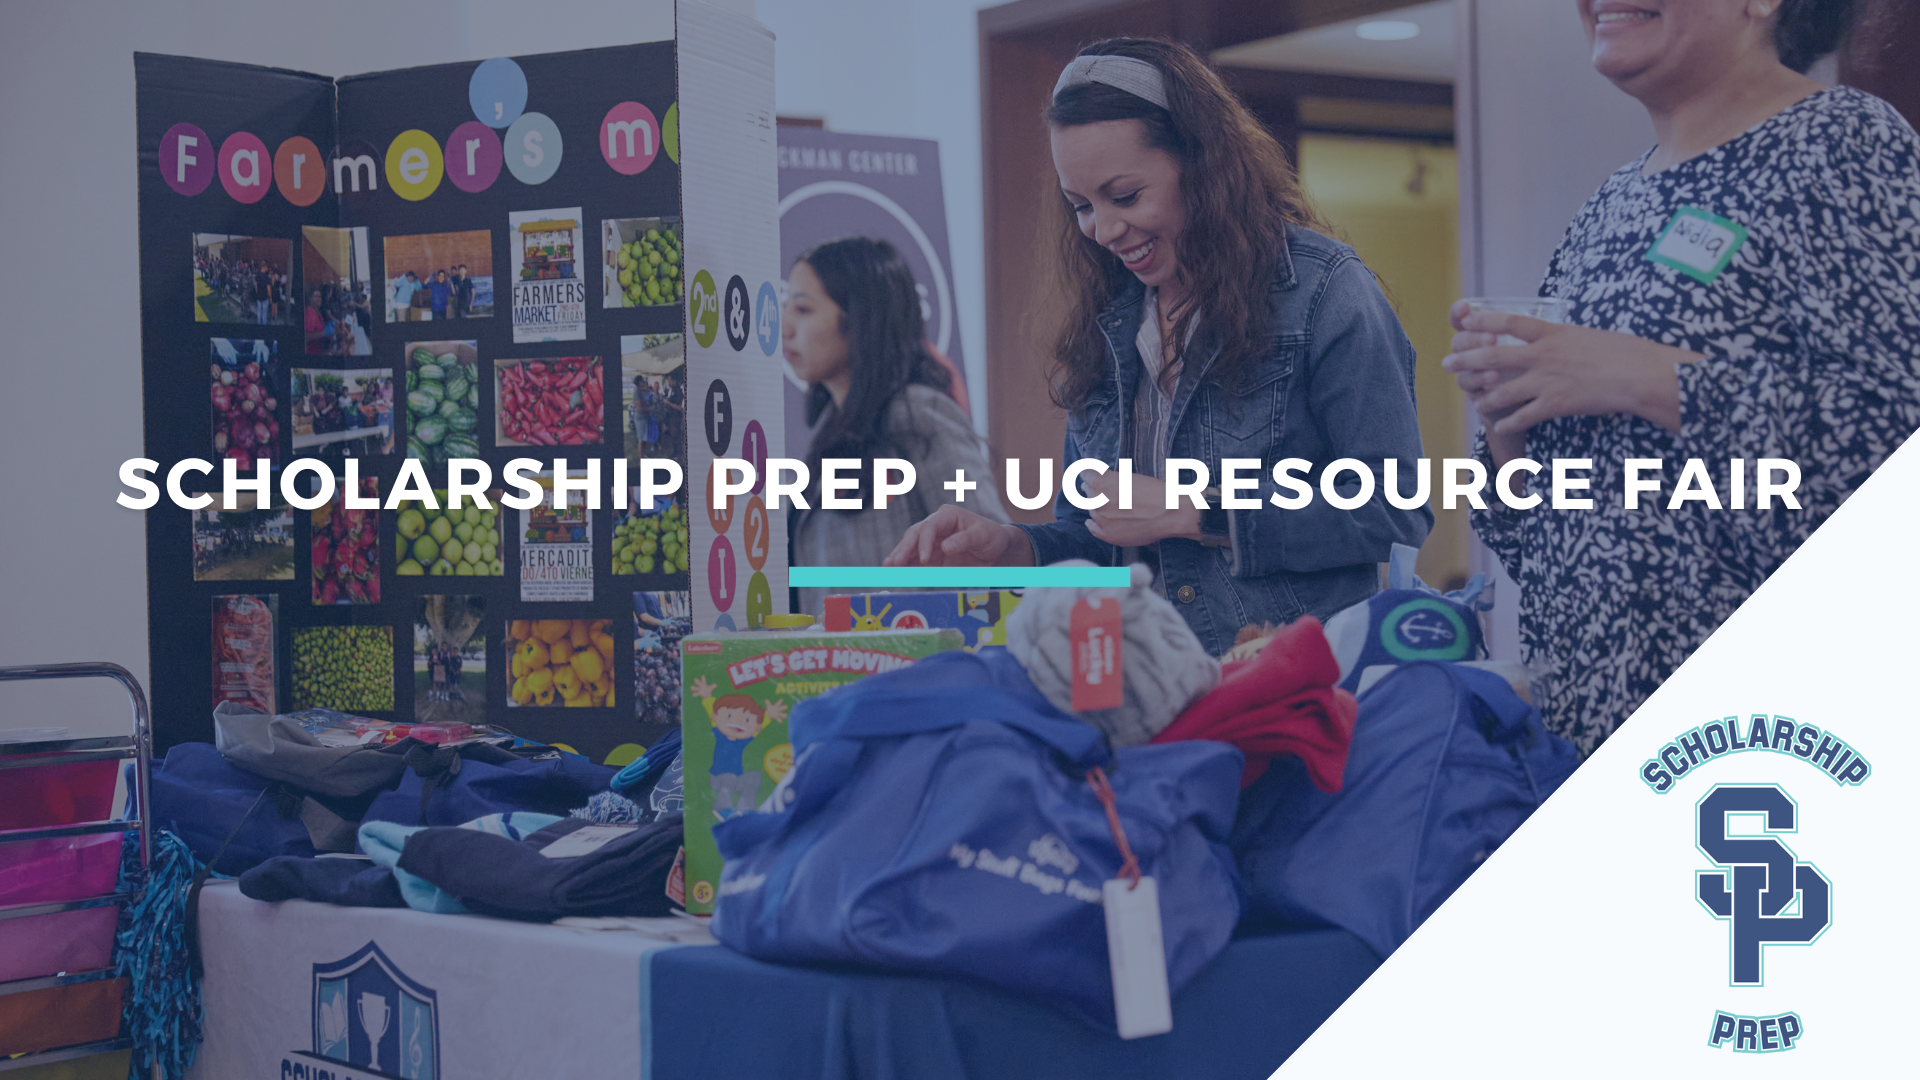 [Video & Infographic] - Scholarship Prep + UCI Resource Fair